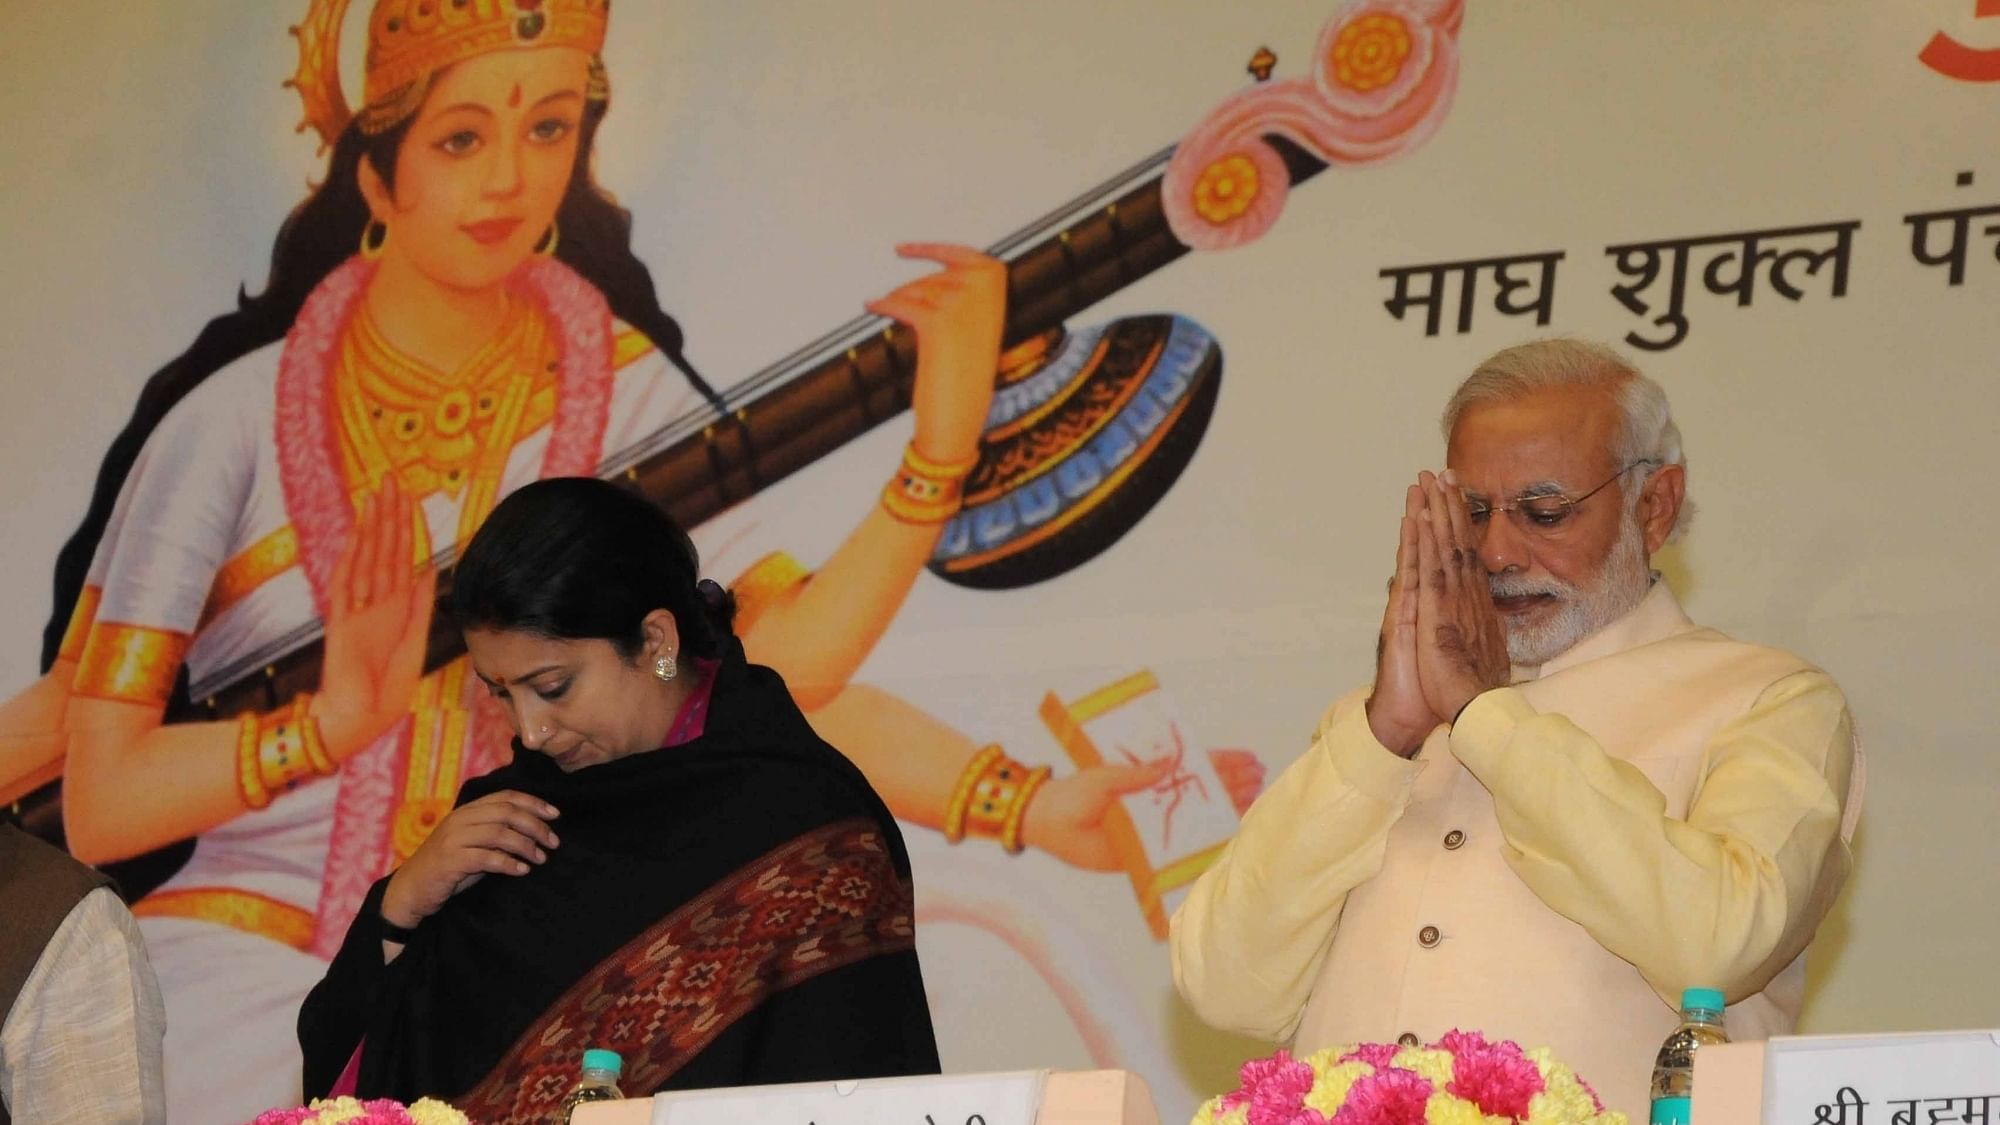 Prime Minister Narendra Modi and Union Minister for Human Resource Development Smriti Irani during the Akhil Bharatiya Prachaarya Sammelan, in New Delhi on 12 Feb 2016. (Photo: IANS)